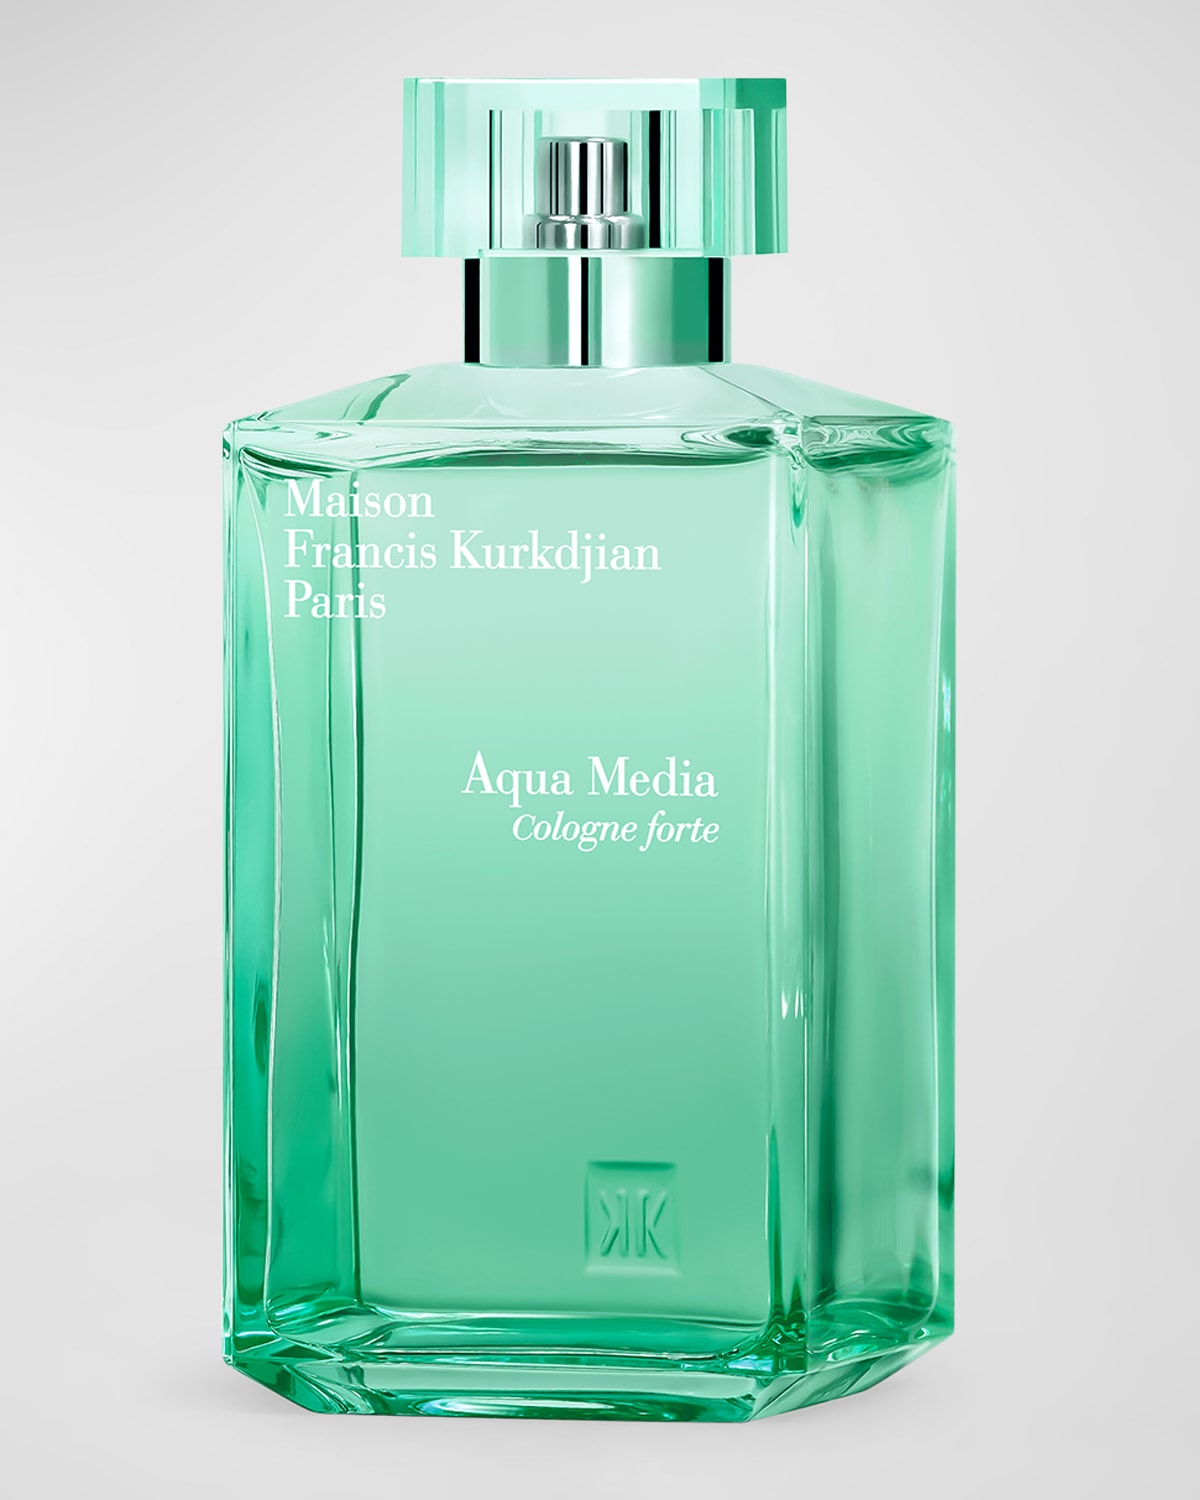 Maison Francis Kurkdjian Aqua Media Cologne Forte Eau de Parfum, 6.8 oz.